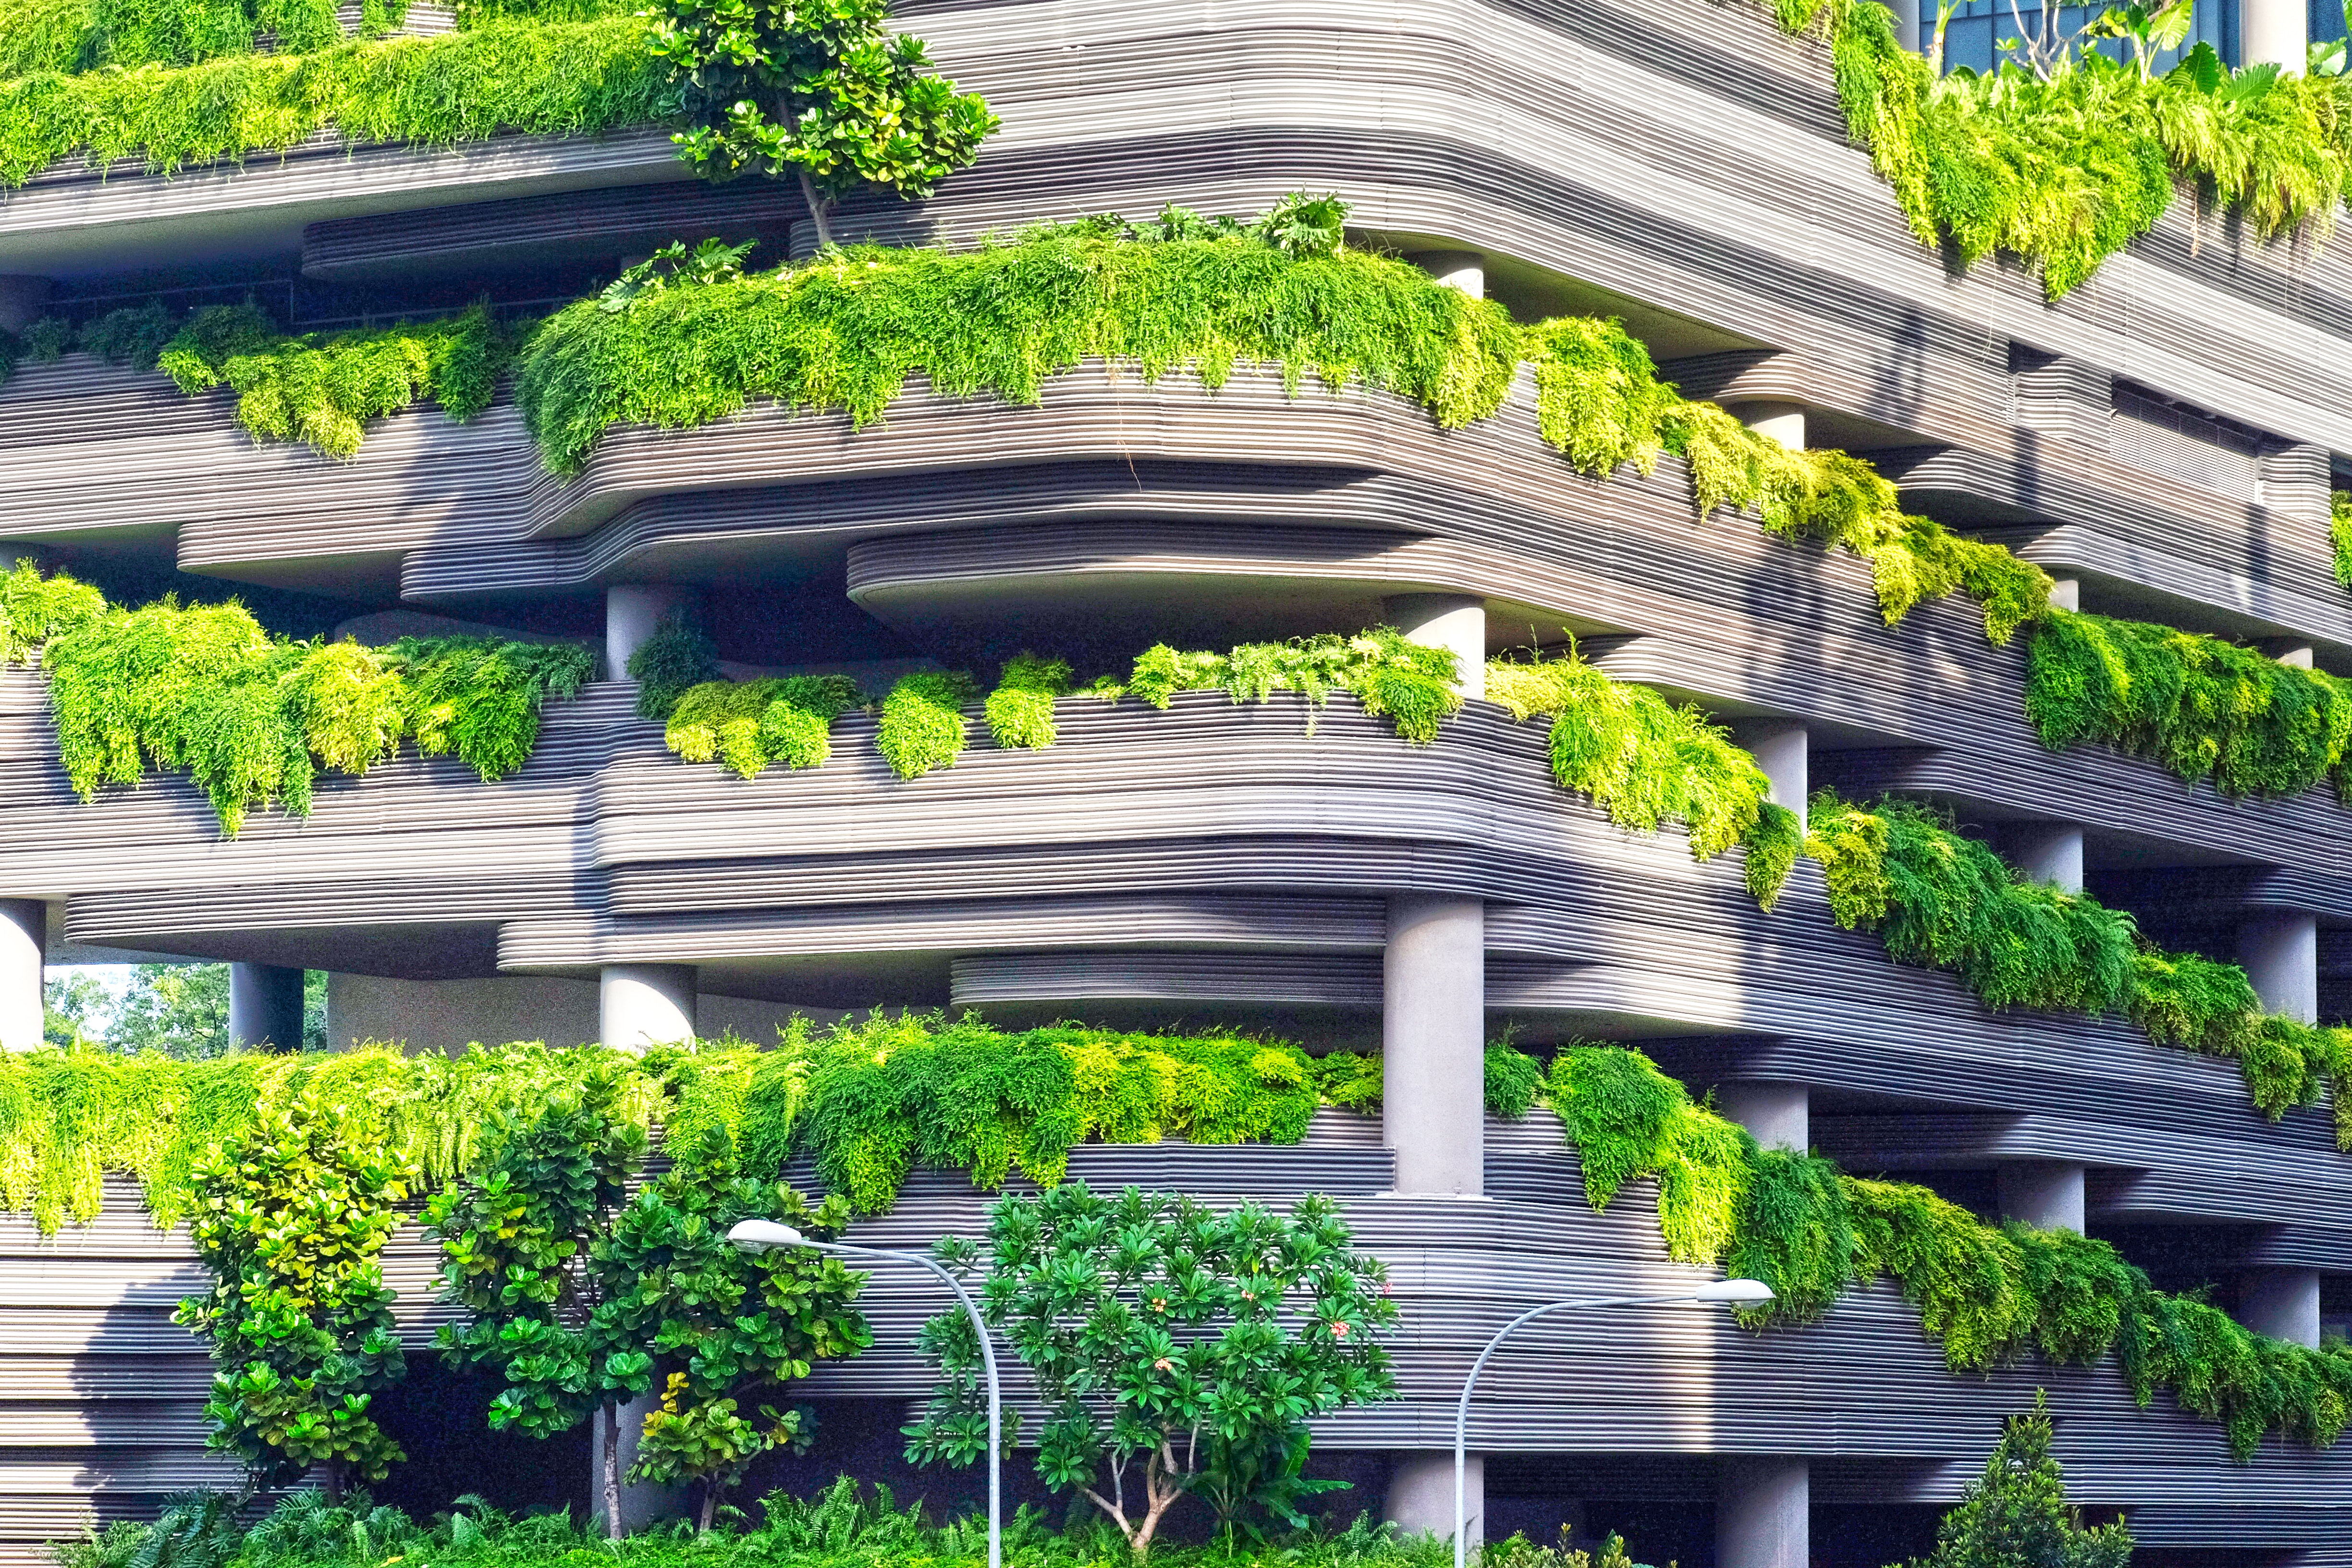 City parking building. Эко френдли архитектура. Гарденс Грин зеленый сад. Сингапур архитектура вертикального озеленения.